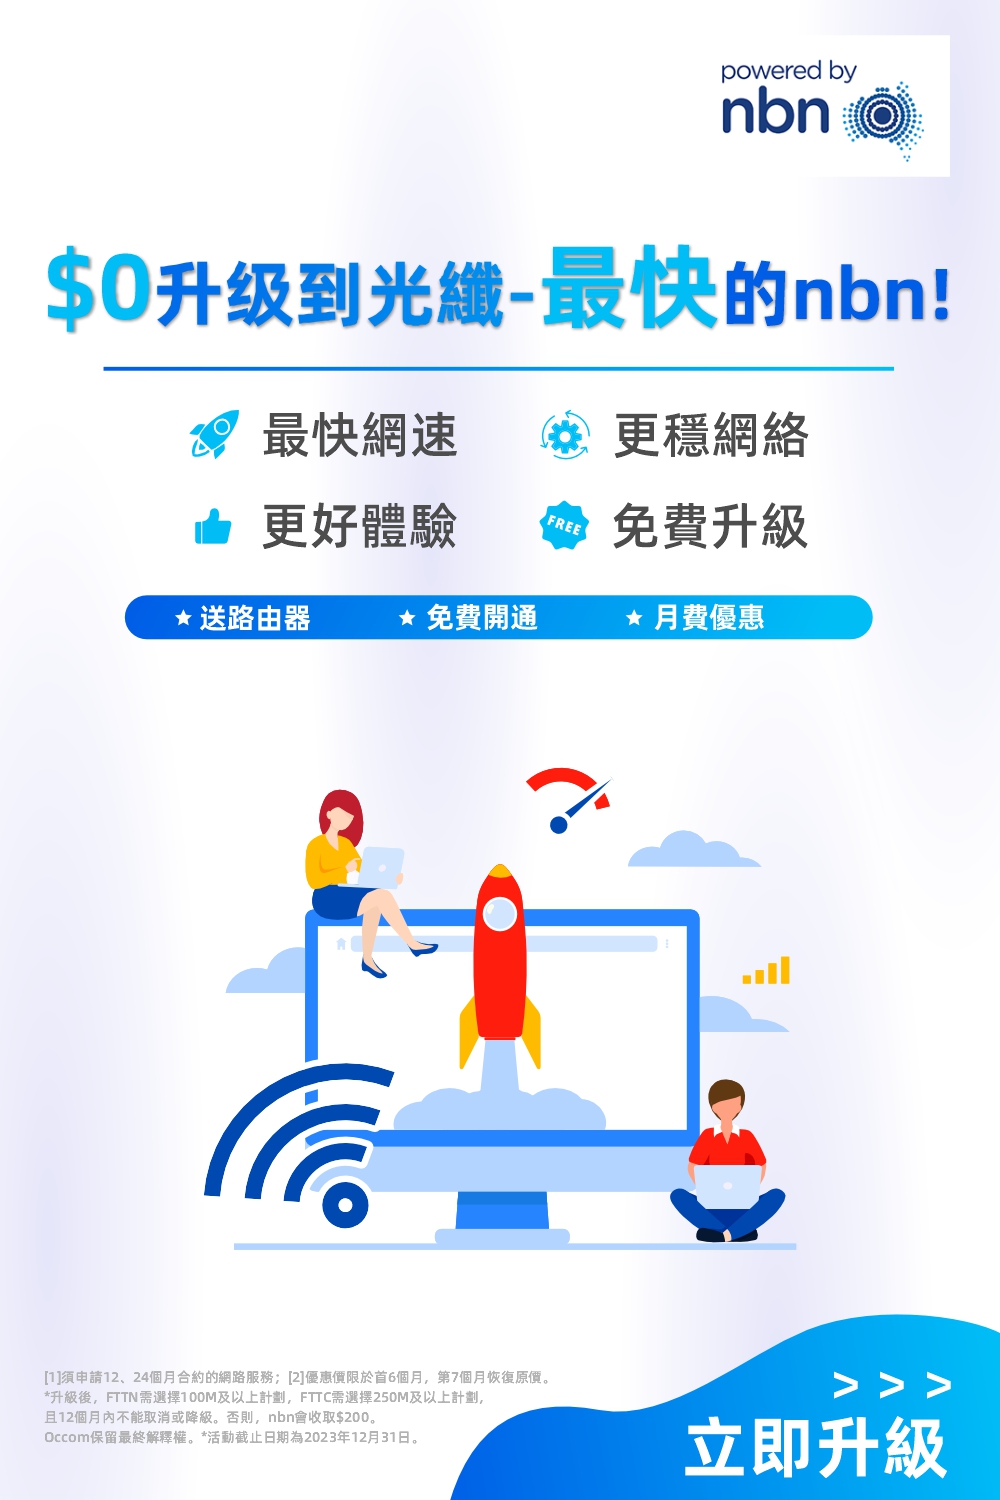 nbn_hk_mobile